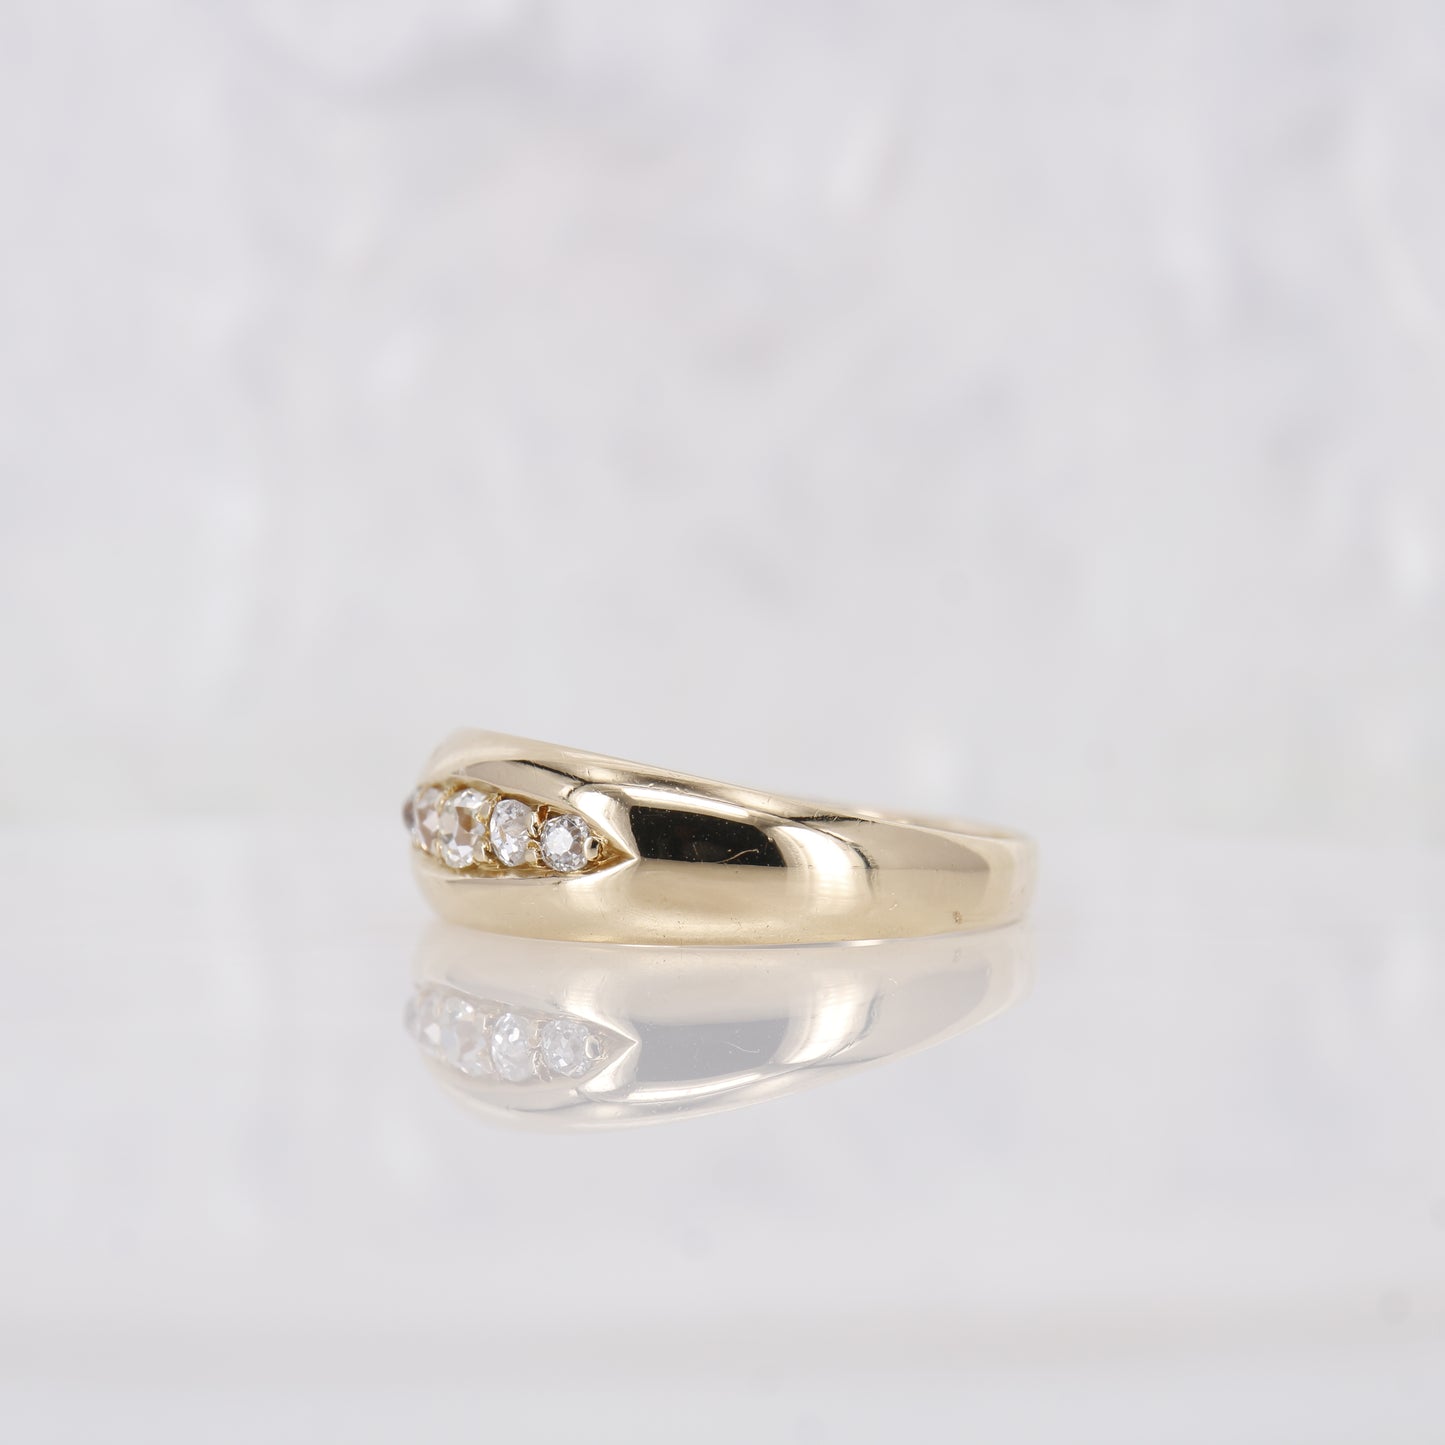 Vintage Diamond Gypsy Ring, 5 Old mine Cut Diamond Ring. 14ct secondhand vintage diamond wedding band.